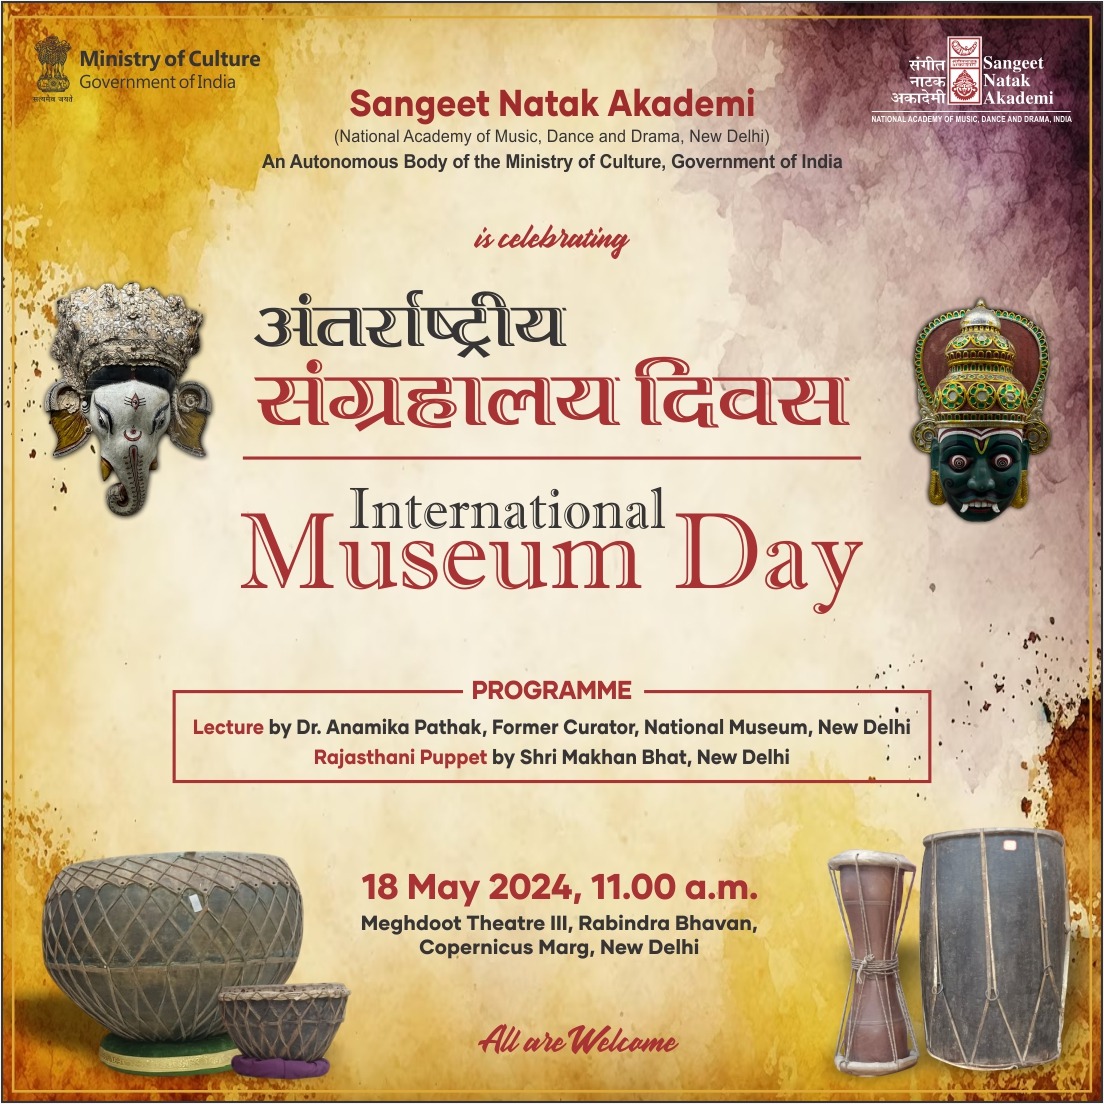 Be our guest at the International Museum Day celebrations being organised by Sangeet Natak Akademi, New Delhi, on 18 May 2024 at Meghdoot Theatre III, Rabindra Bhavan, Copernicus Marg, New Delhi. #dance #drama #artist #folk #SangeetNatakAkademi #InternationalMuseumDay #delhi